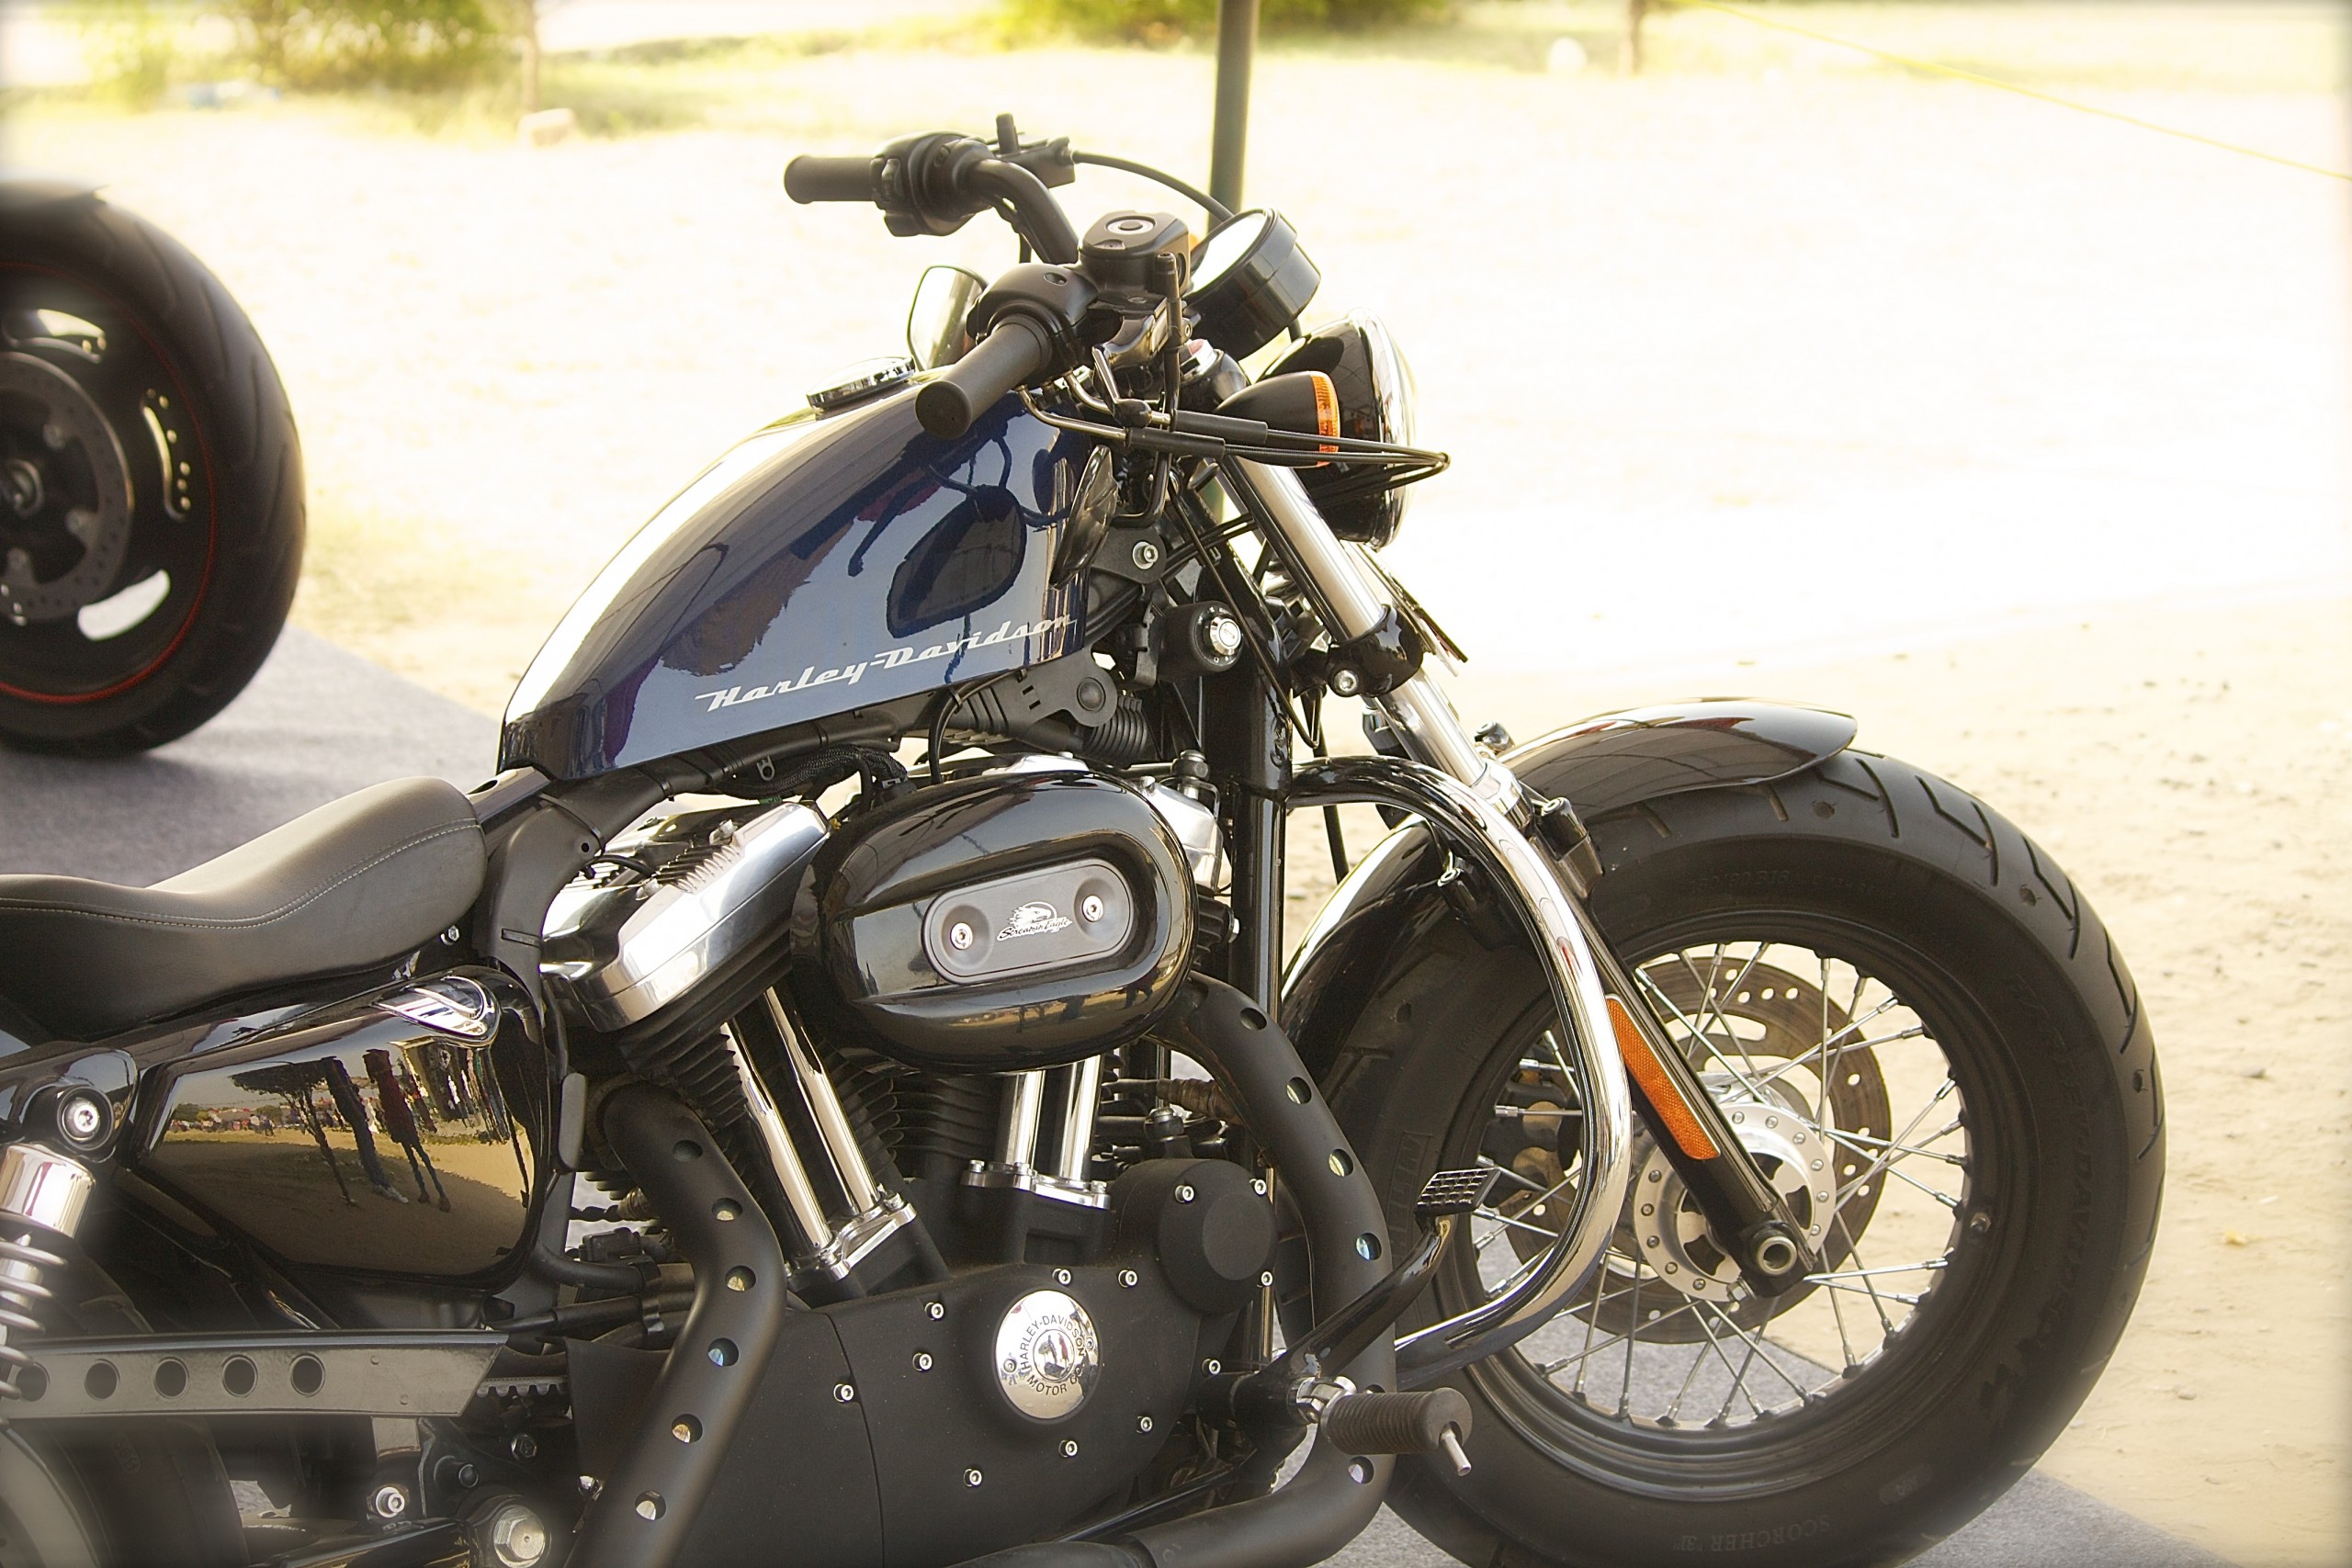 Harley Davidson Bike on the road